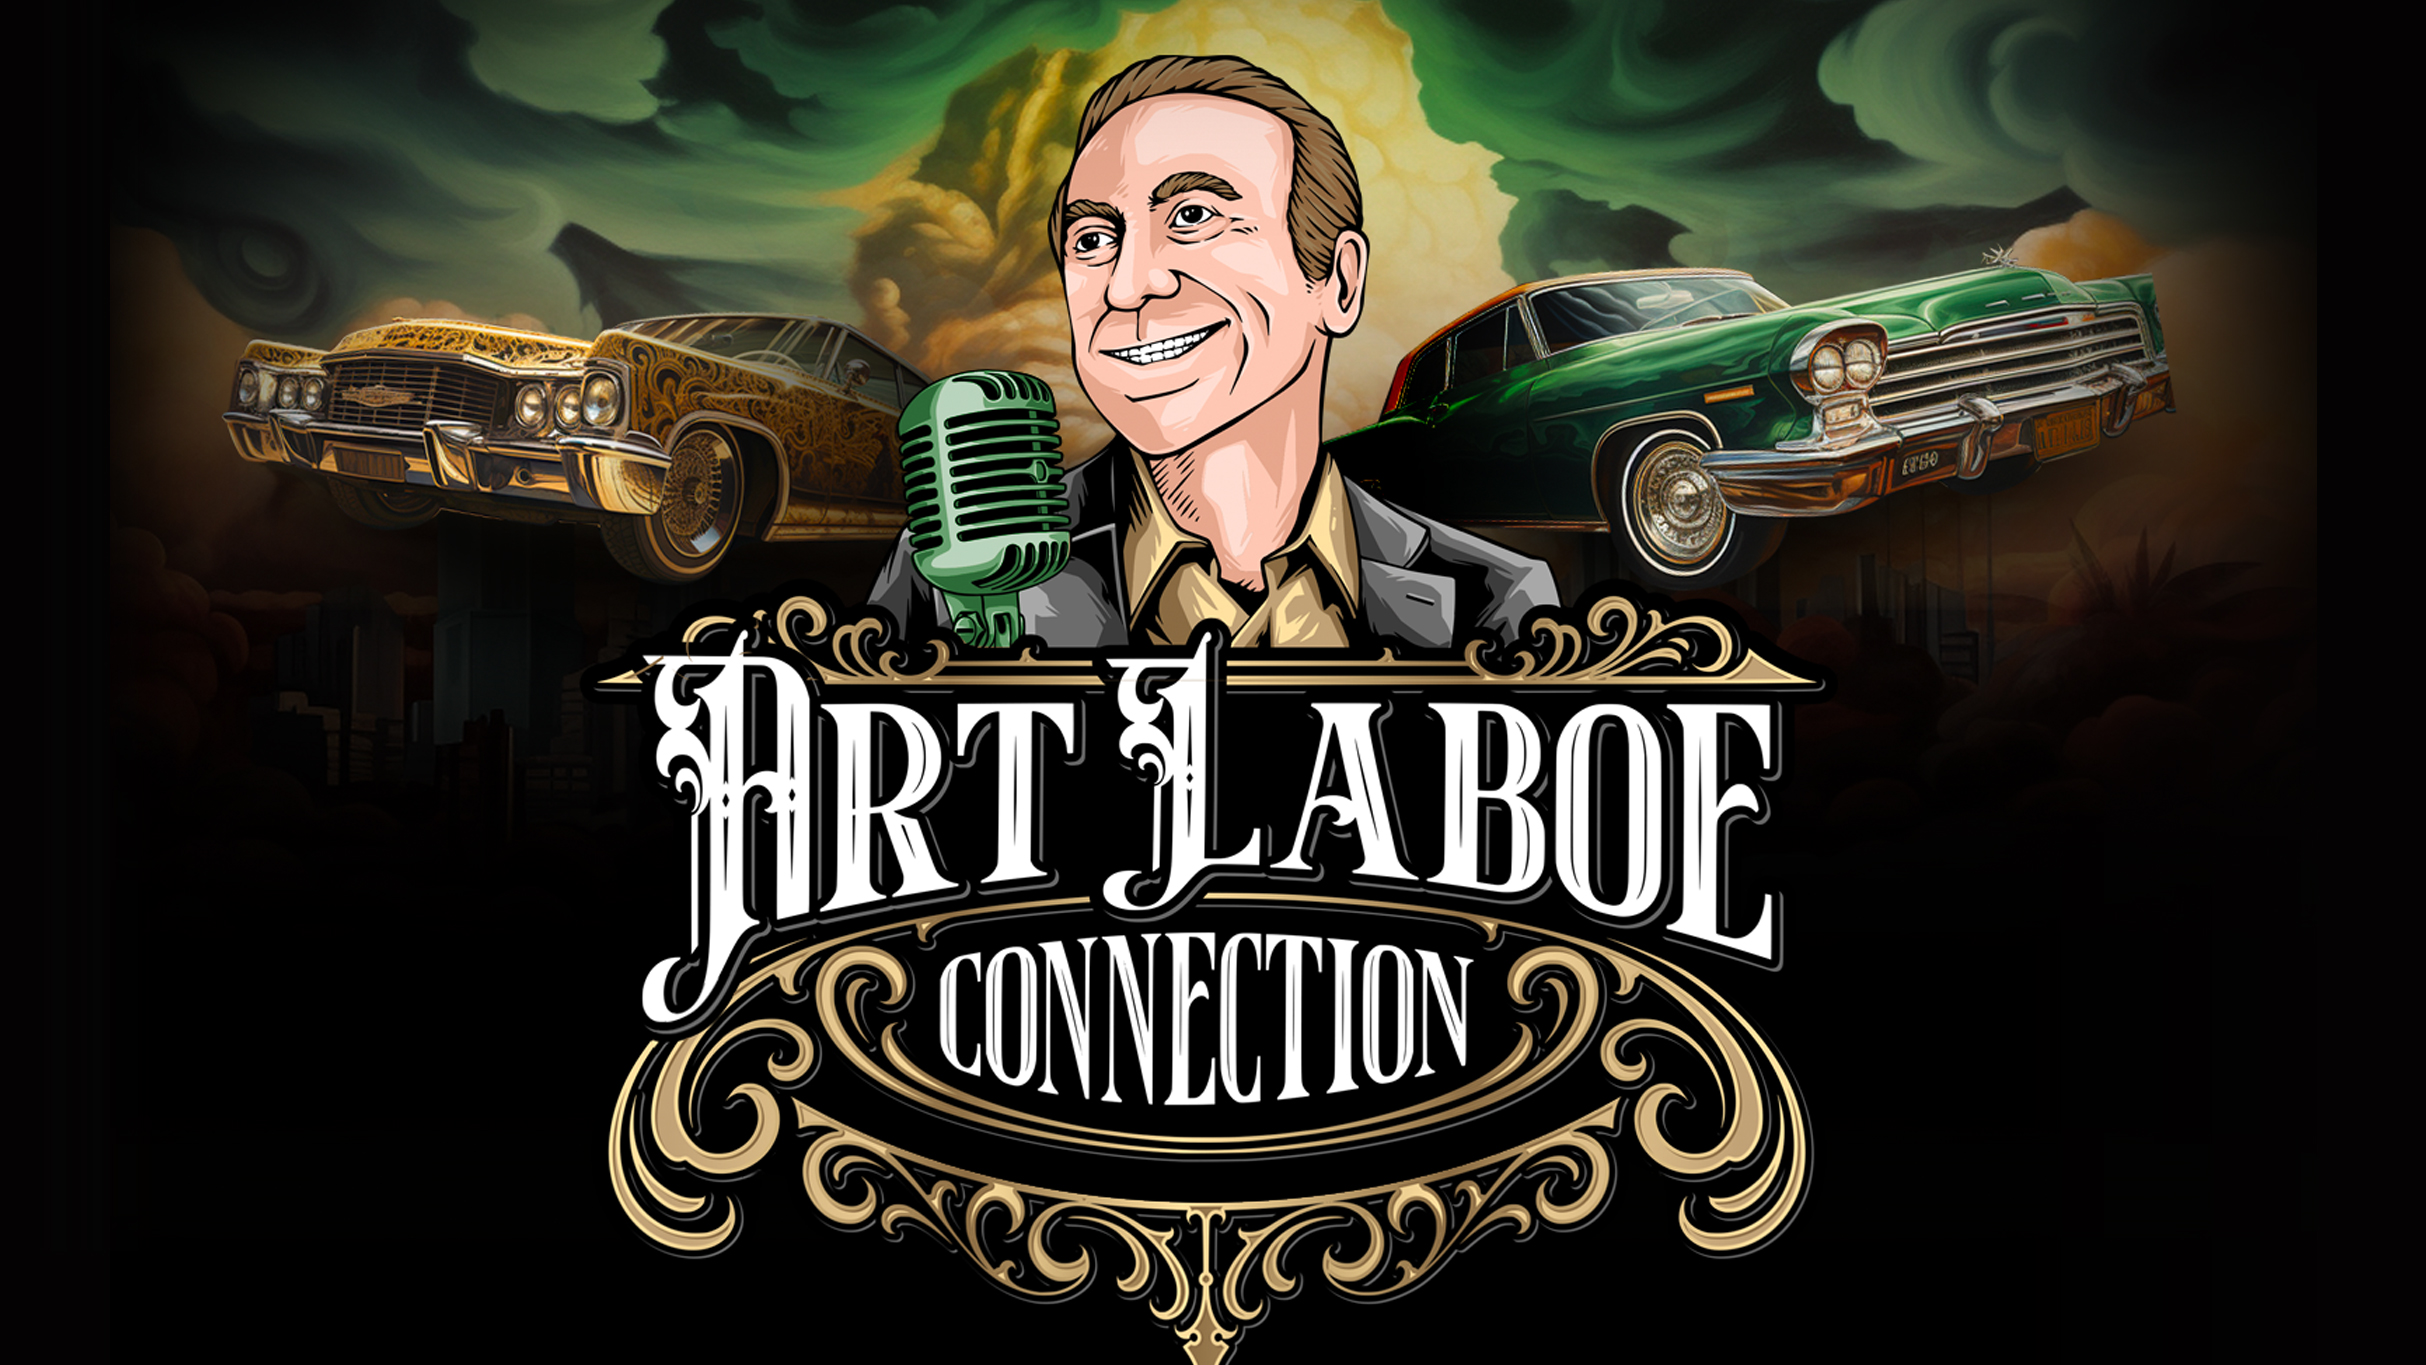 The Art Laboe Show